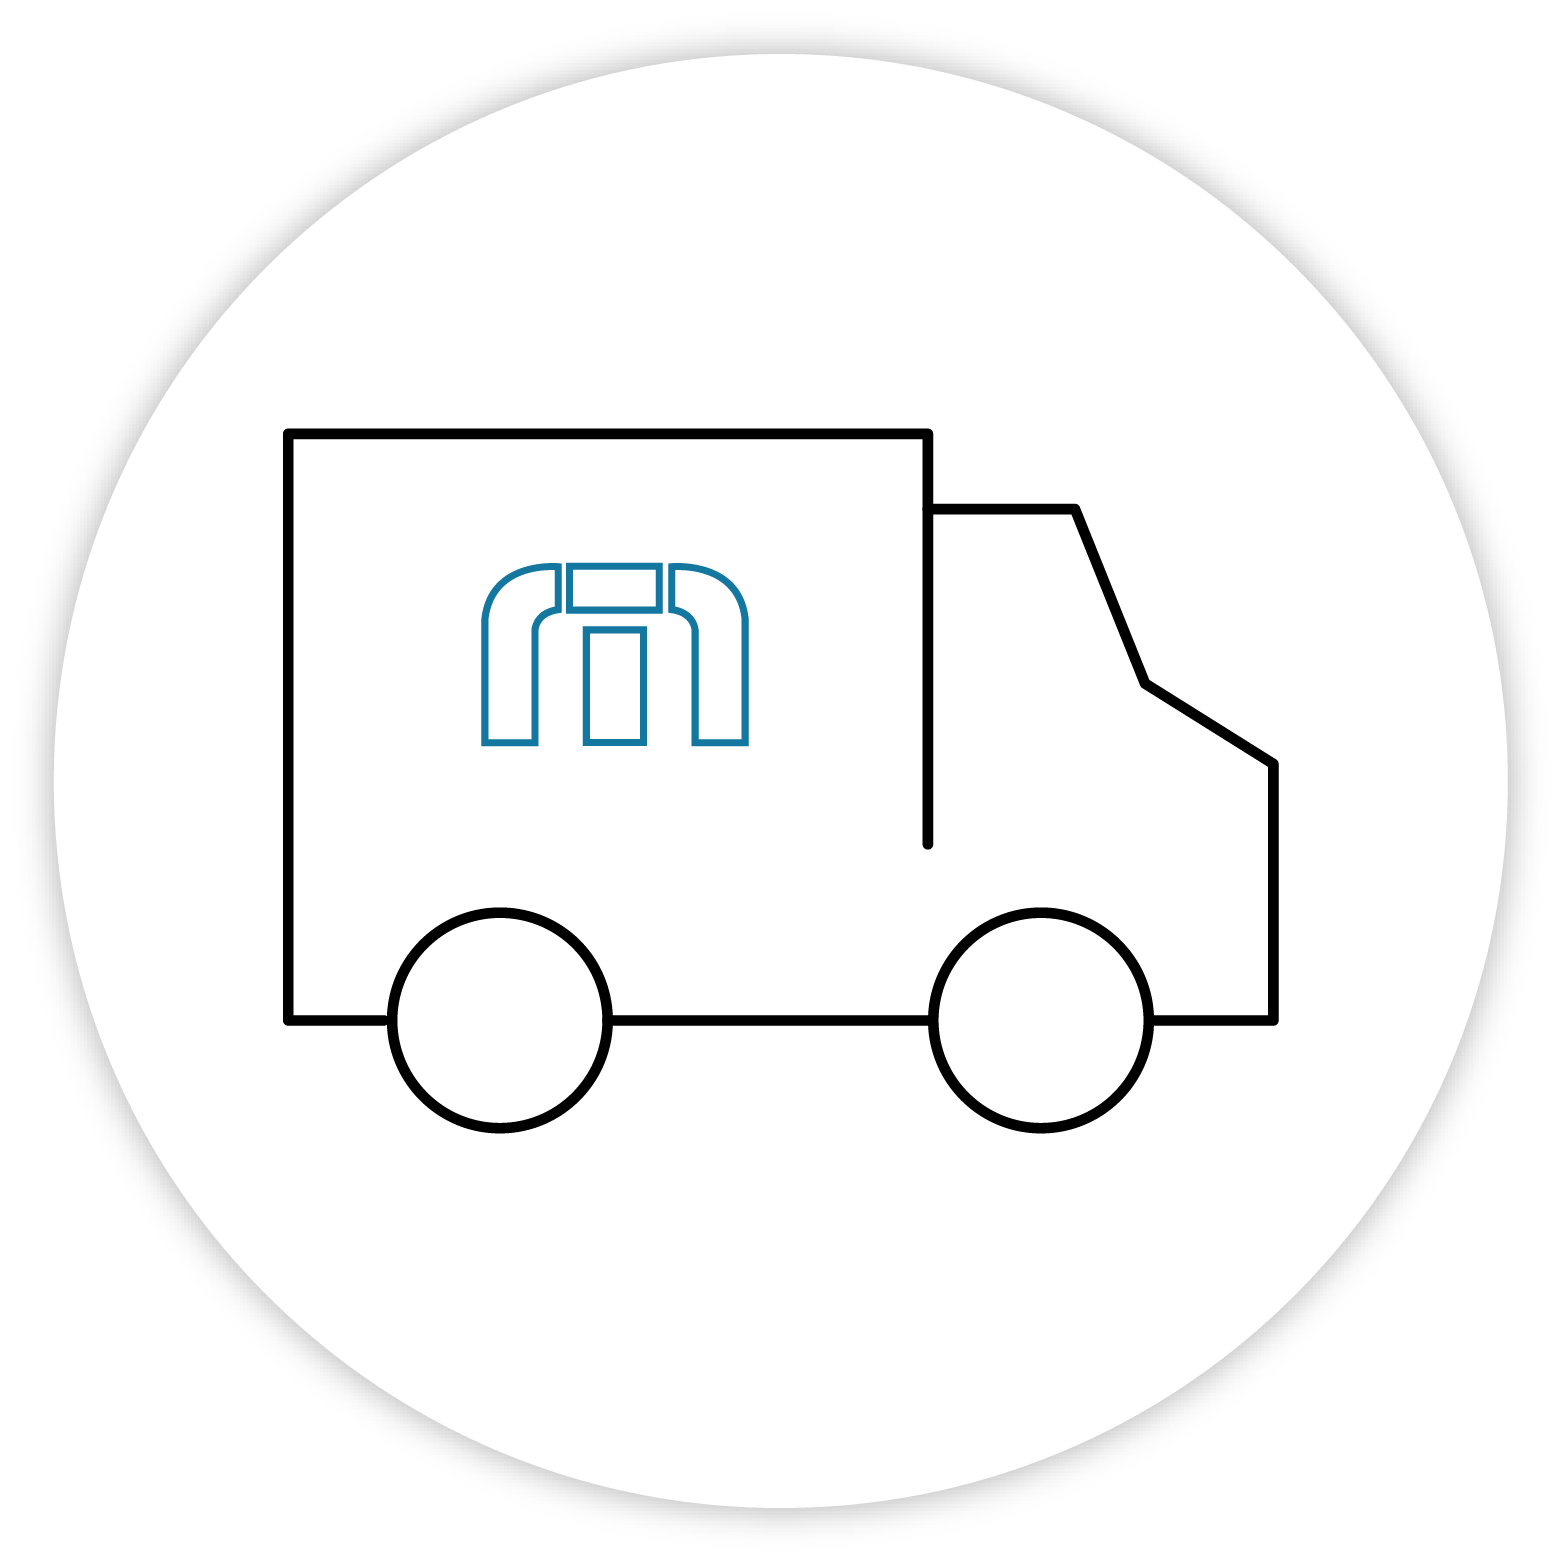 Free Shipping Icon